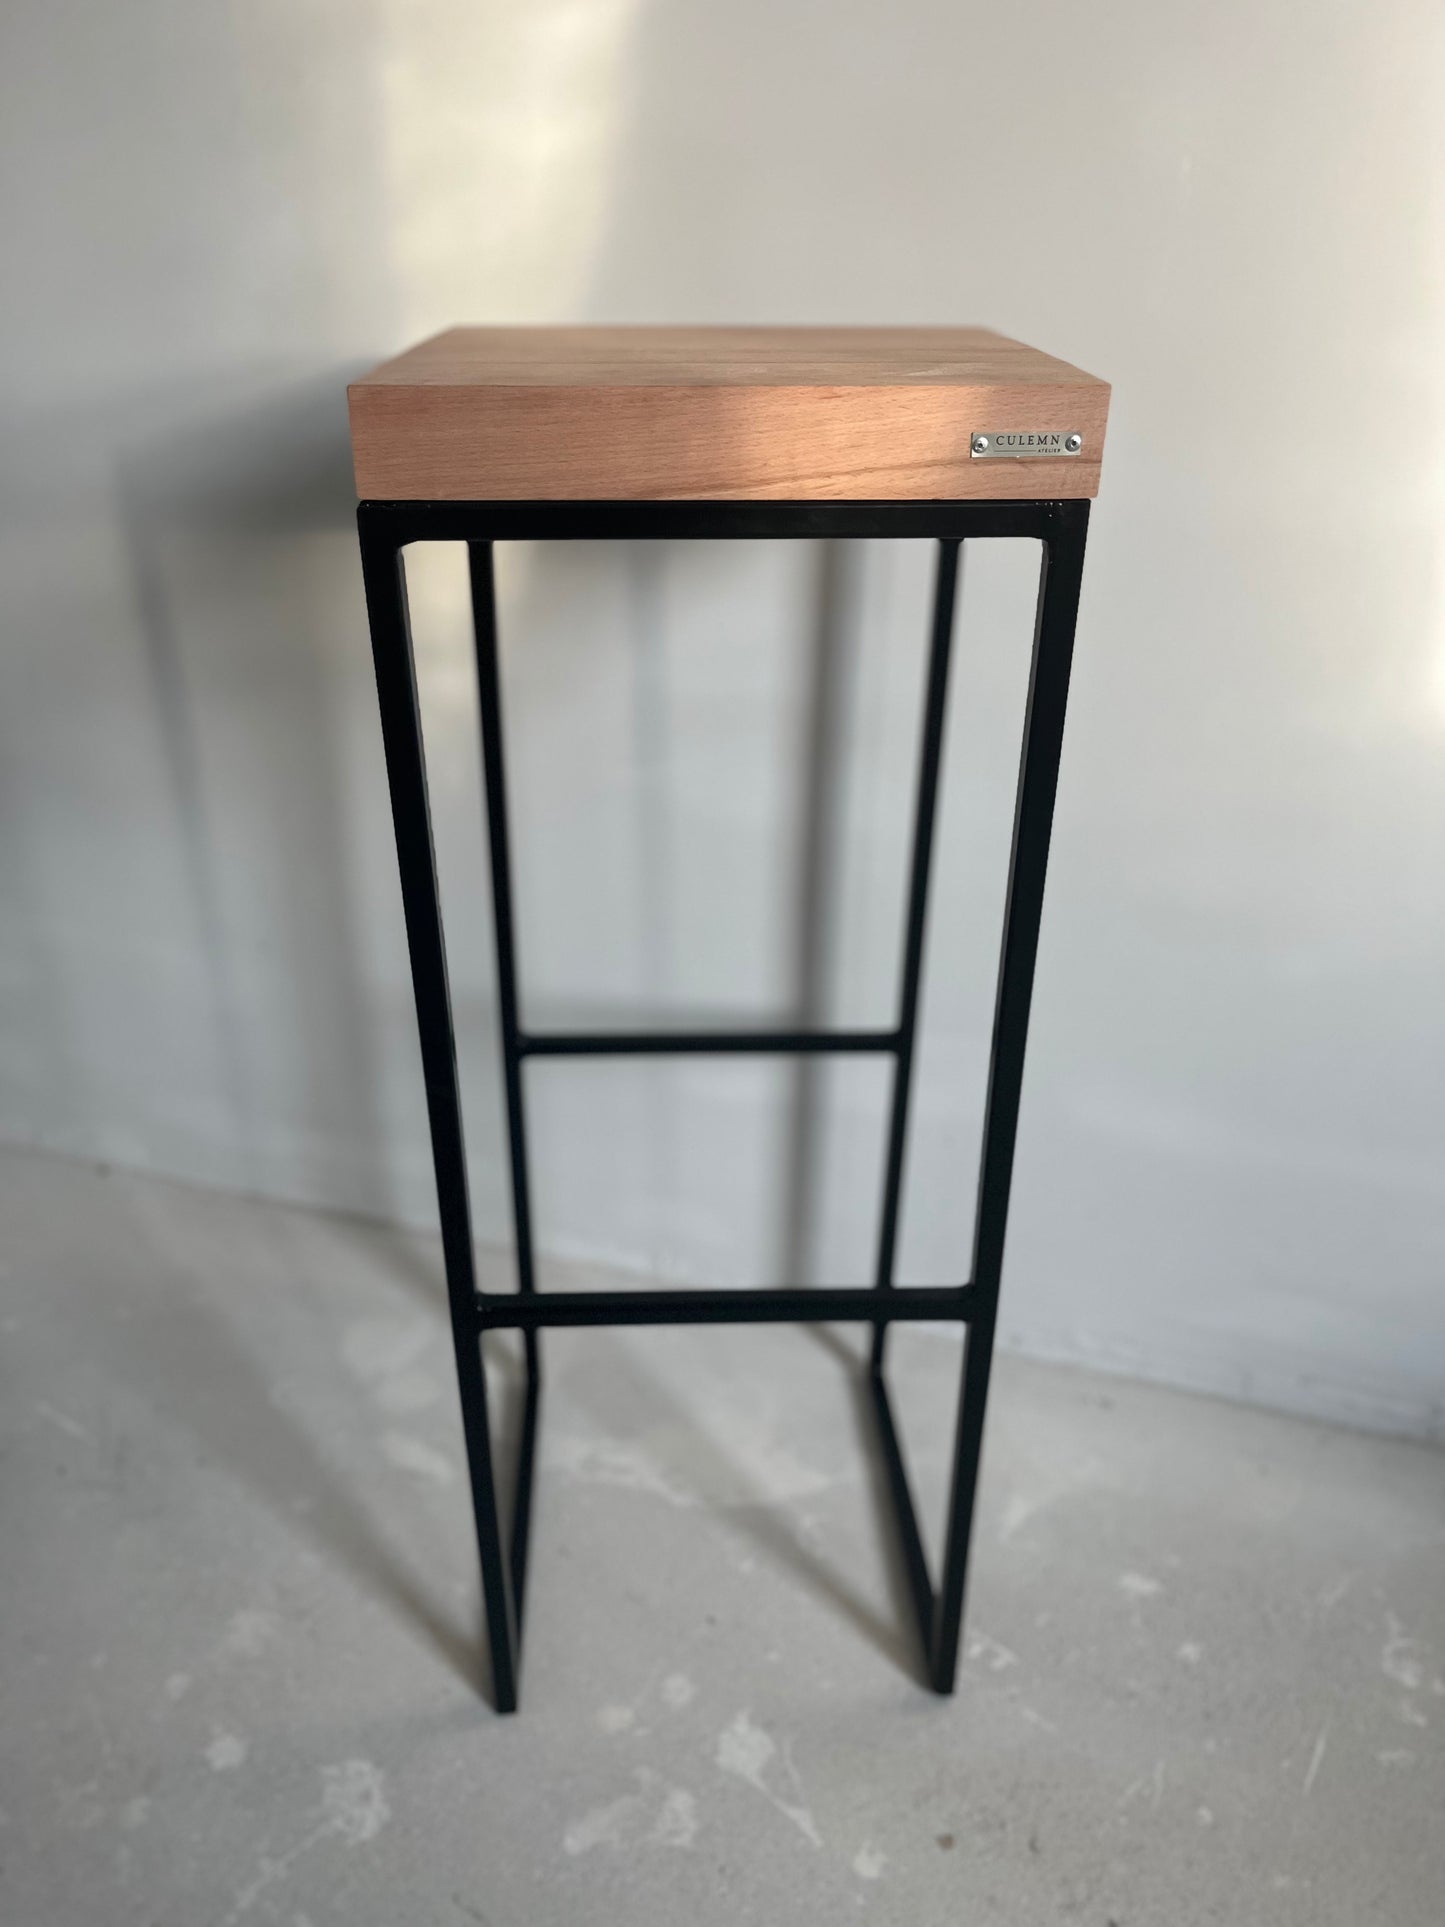 Challe bar stool